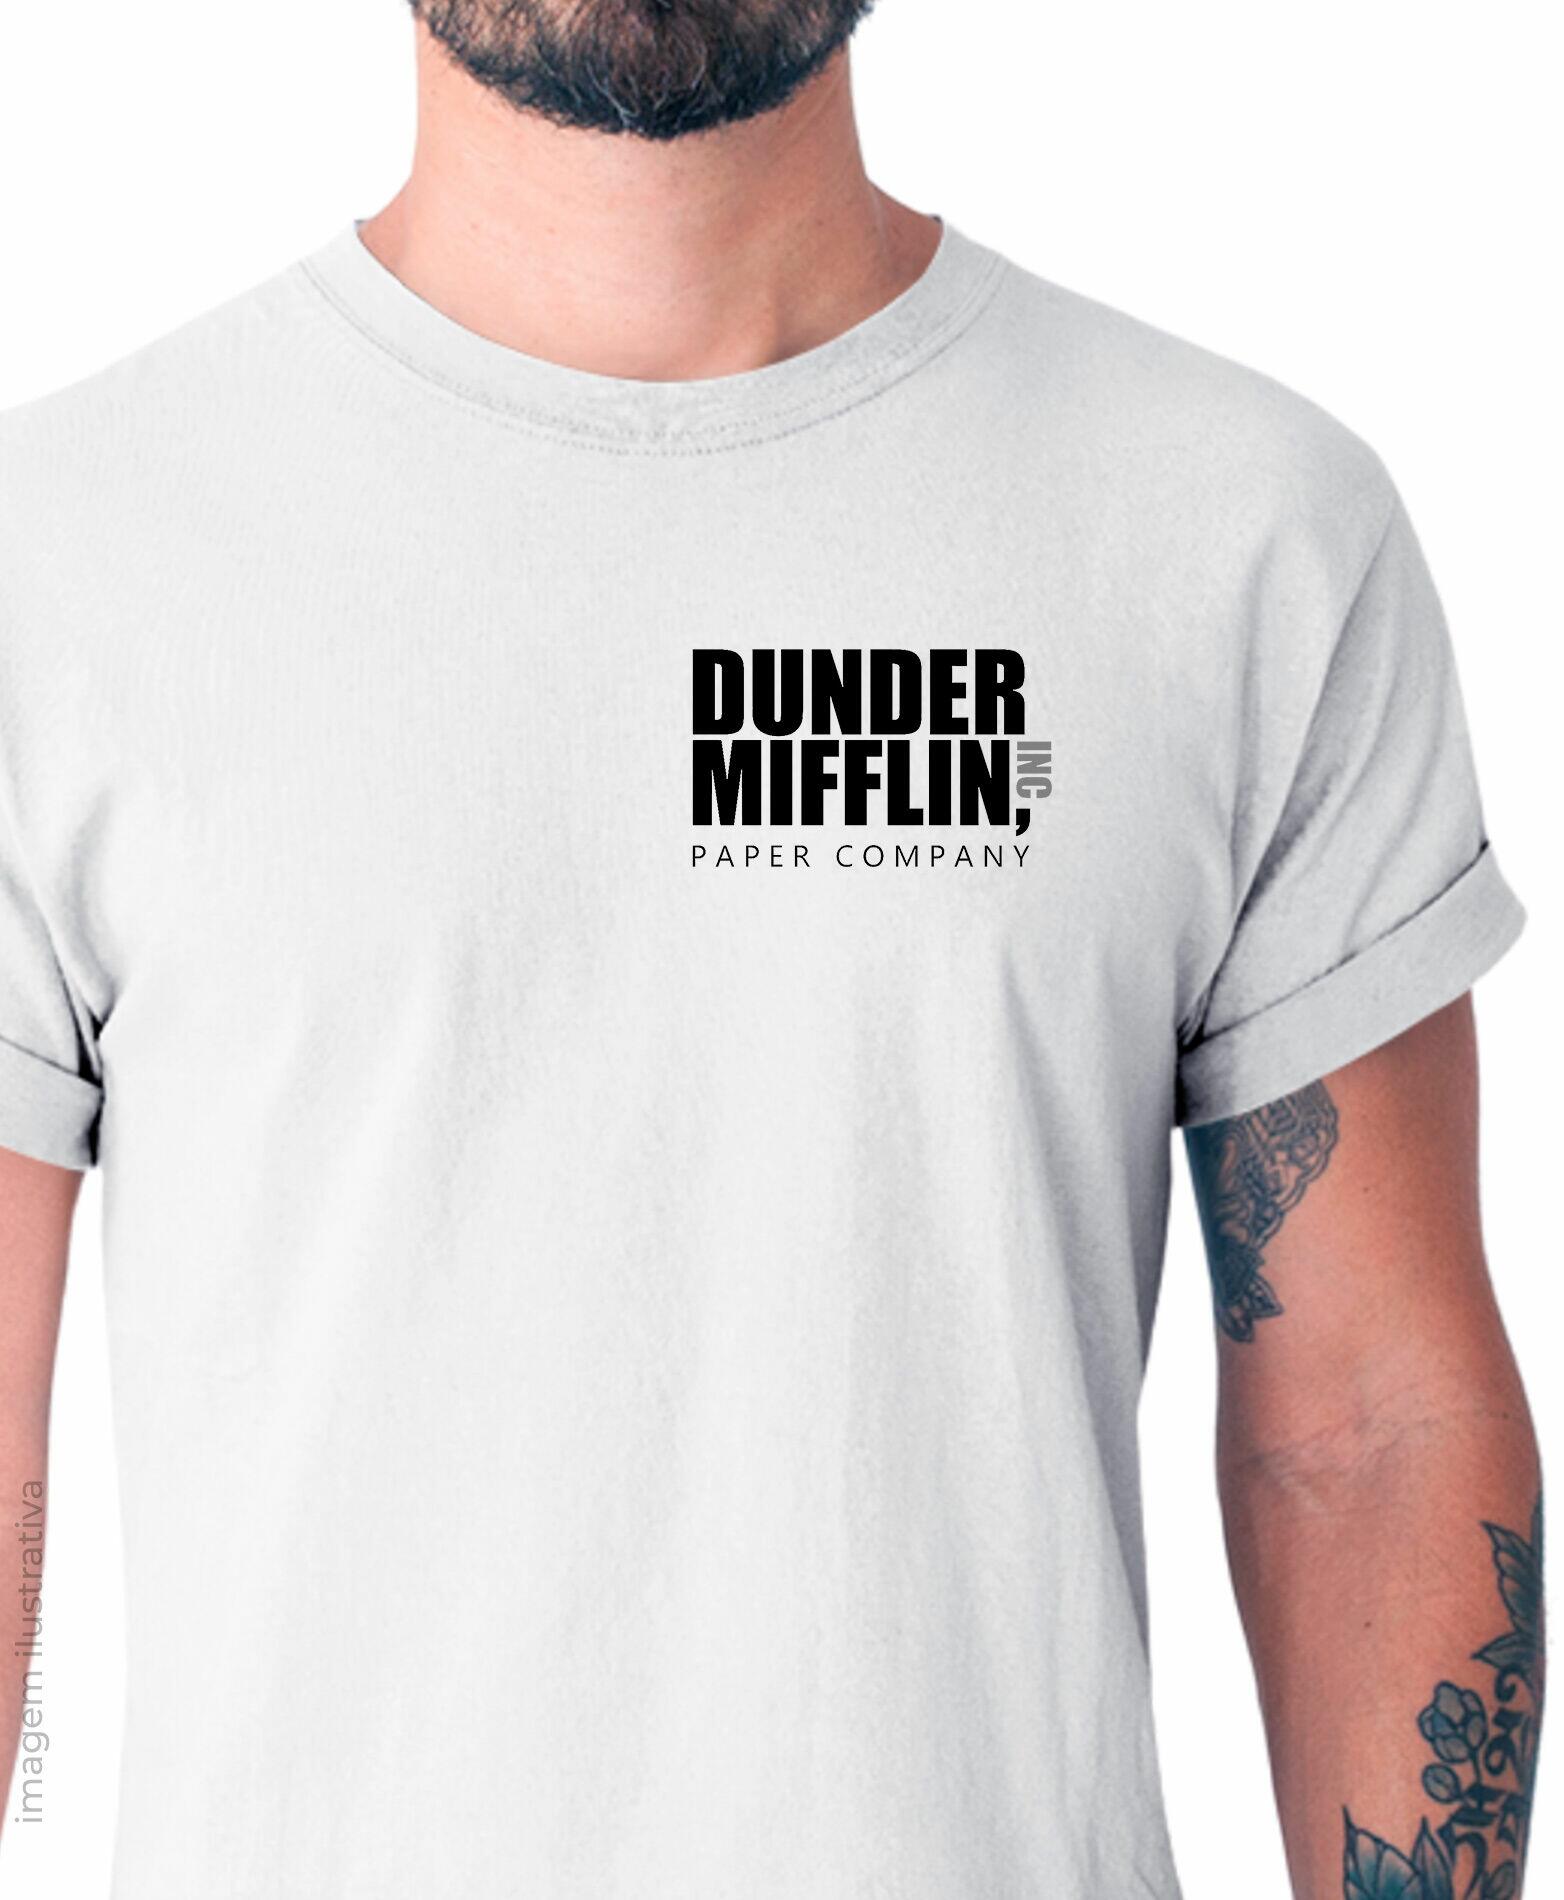 The Office Dundler Mifflin Camiseta